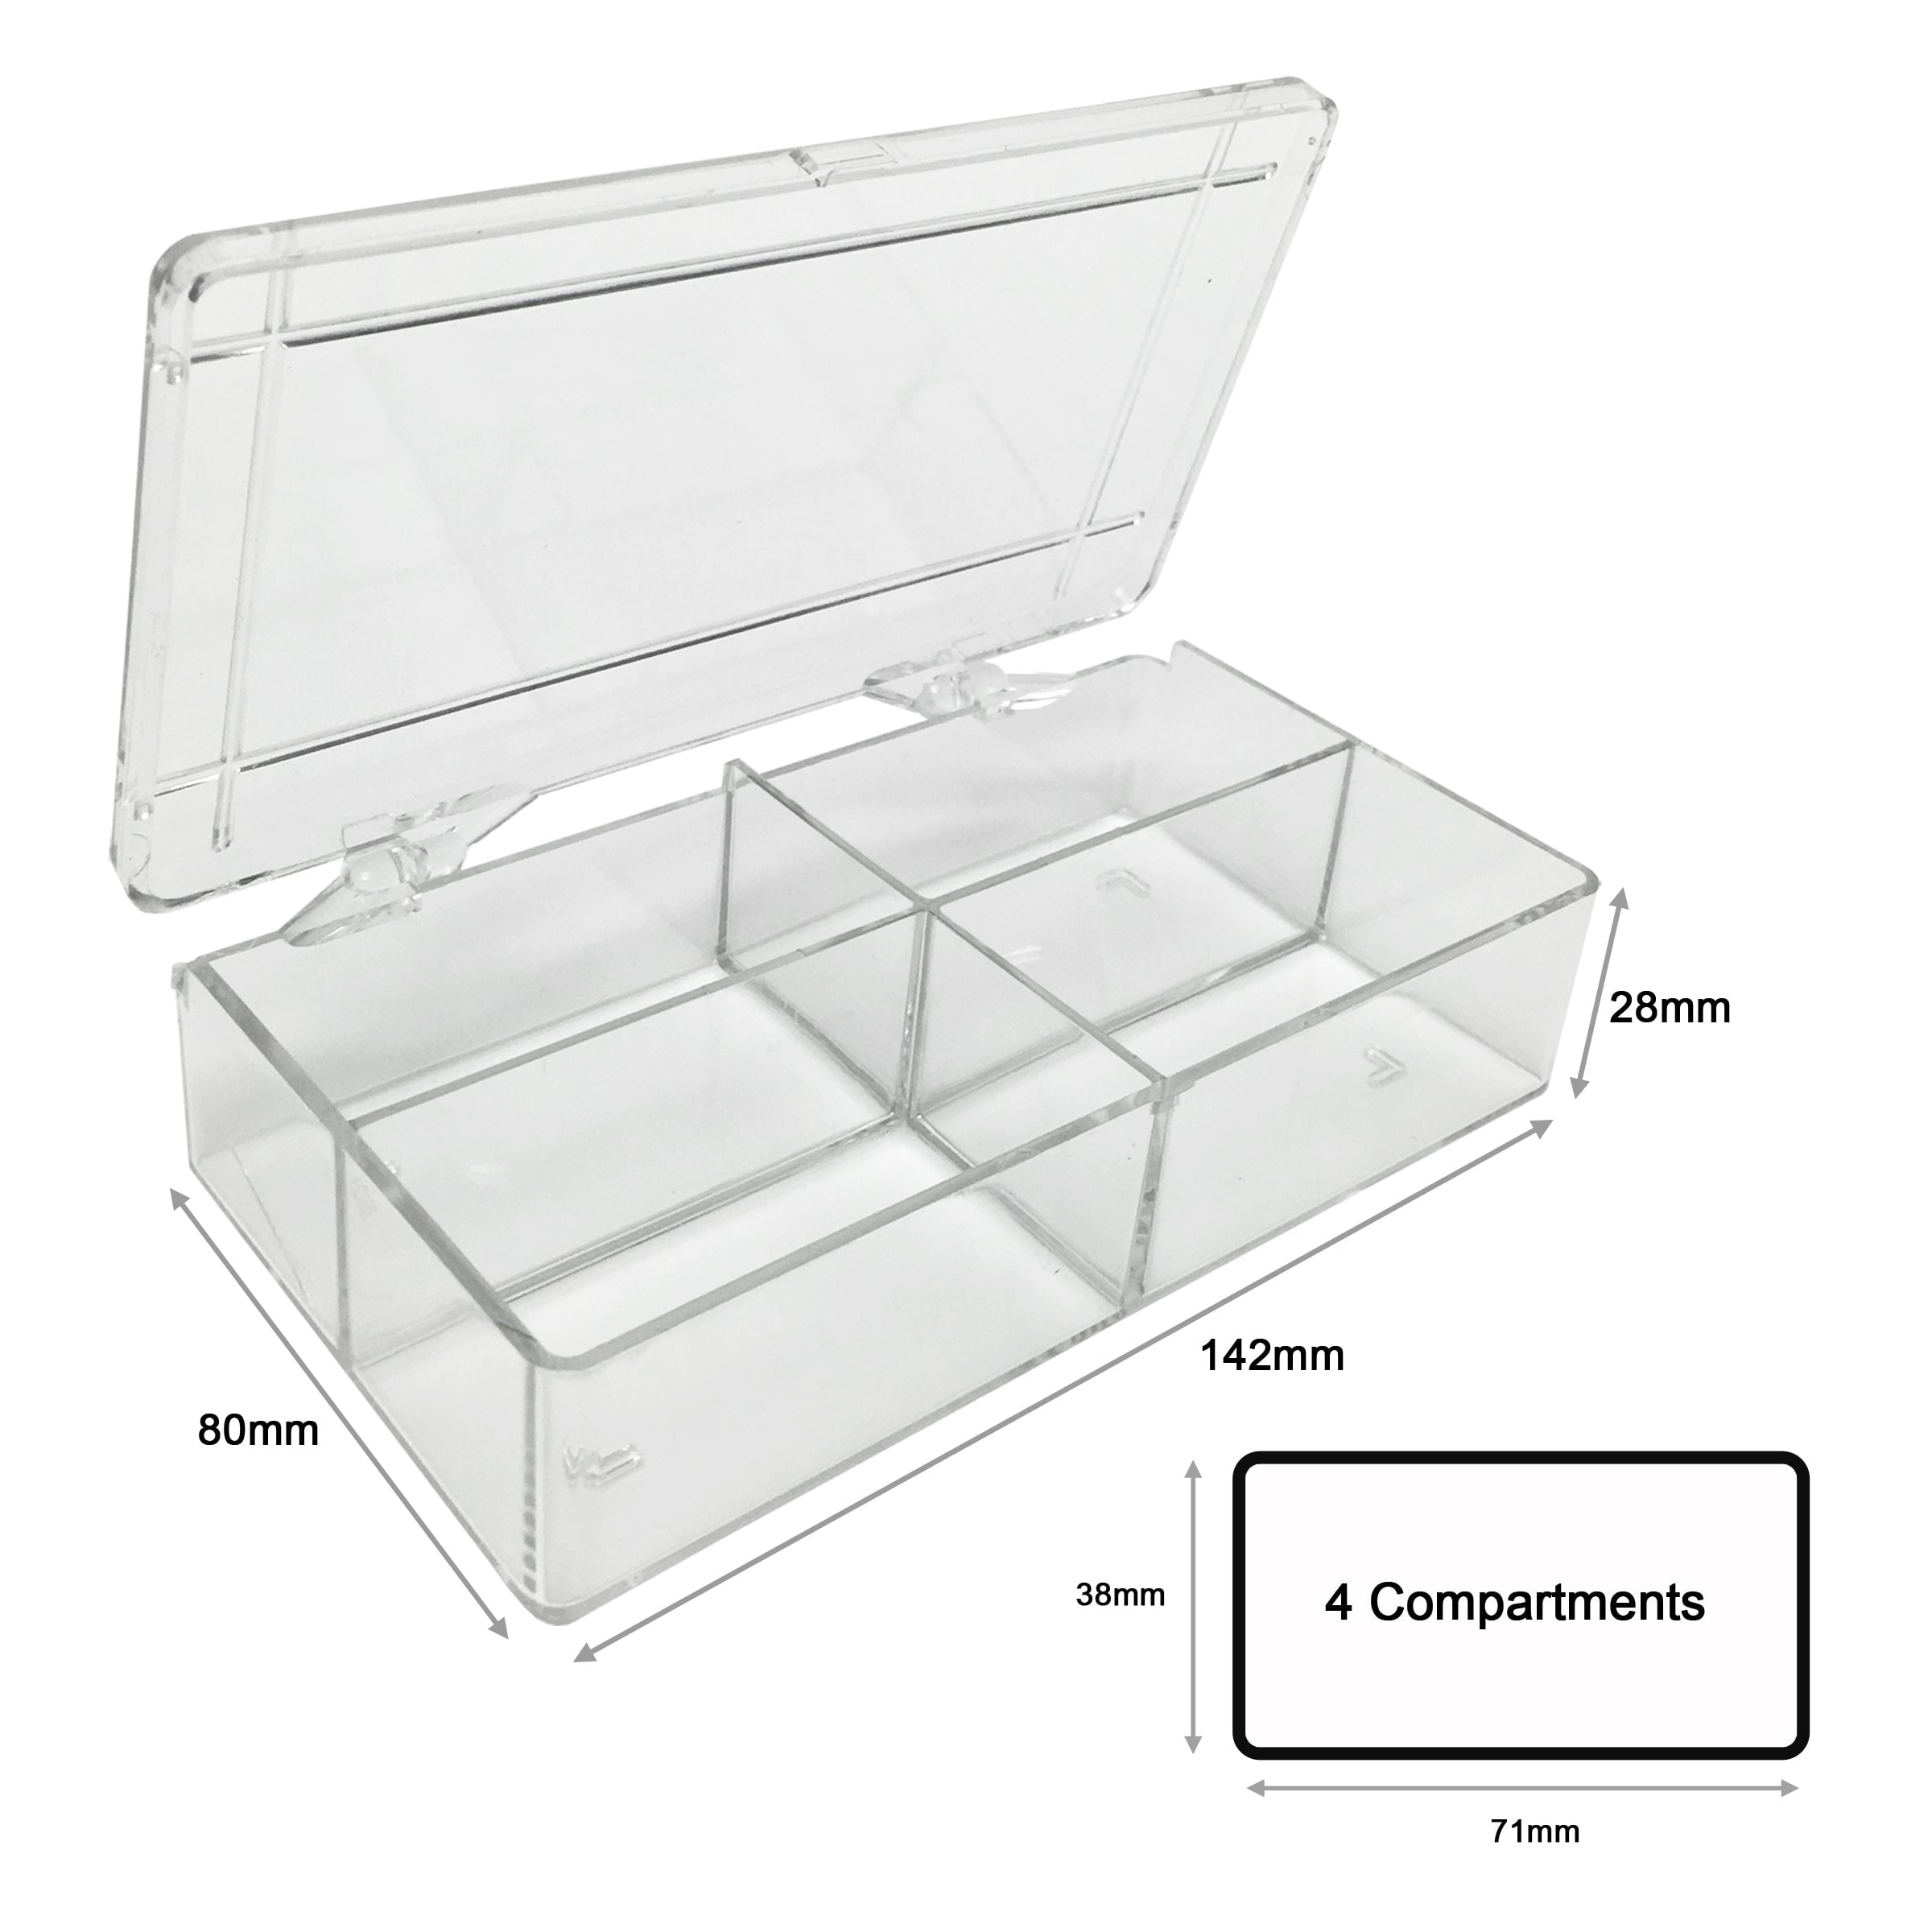 MTC Bio B1204 MultiBox, 4 compartments, 38 x 71 x 28mm each, 6/pk